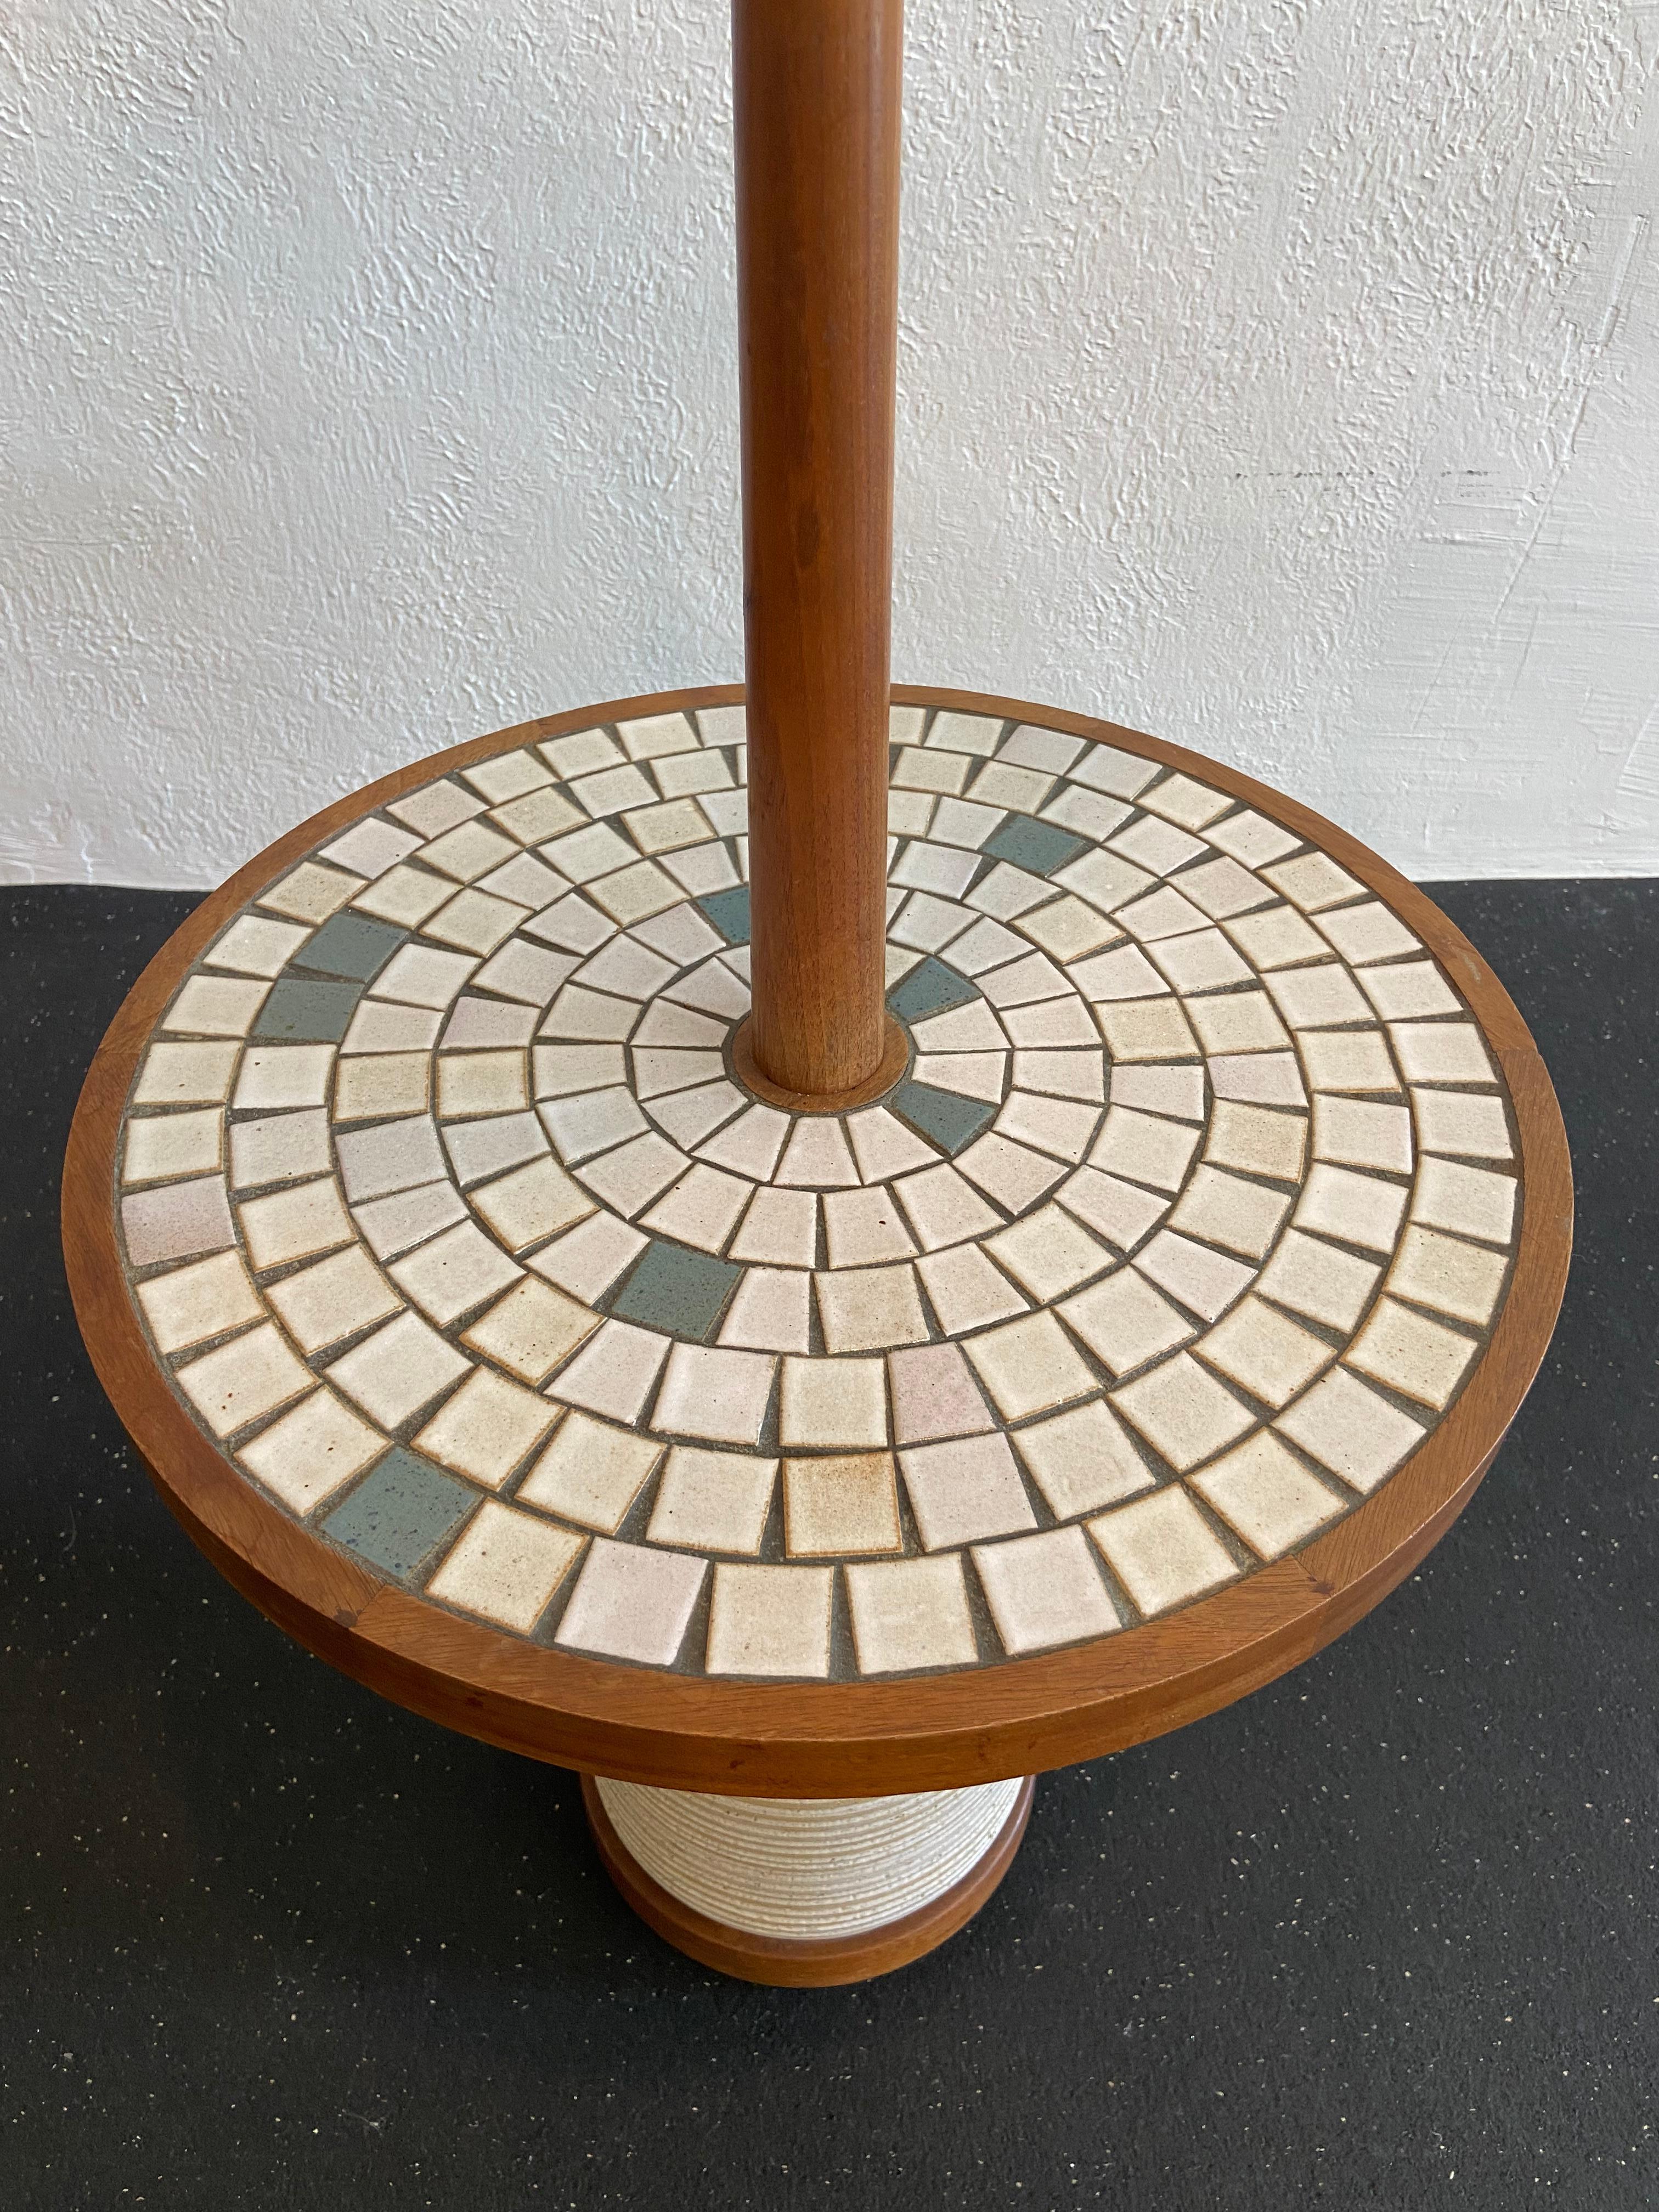 Jane and Gordon Martz Ceramic Floor Lamp with Table 1